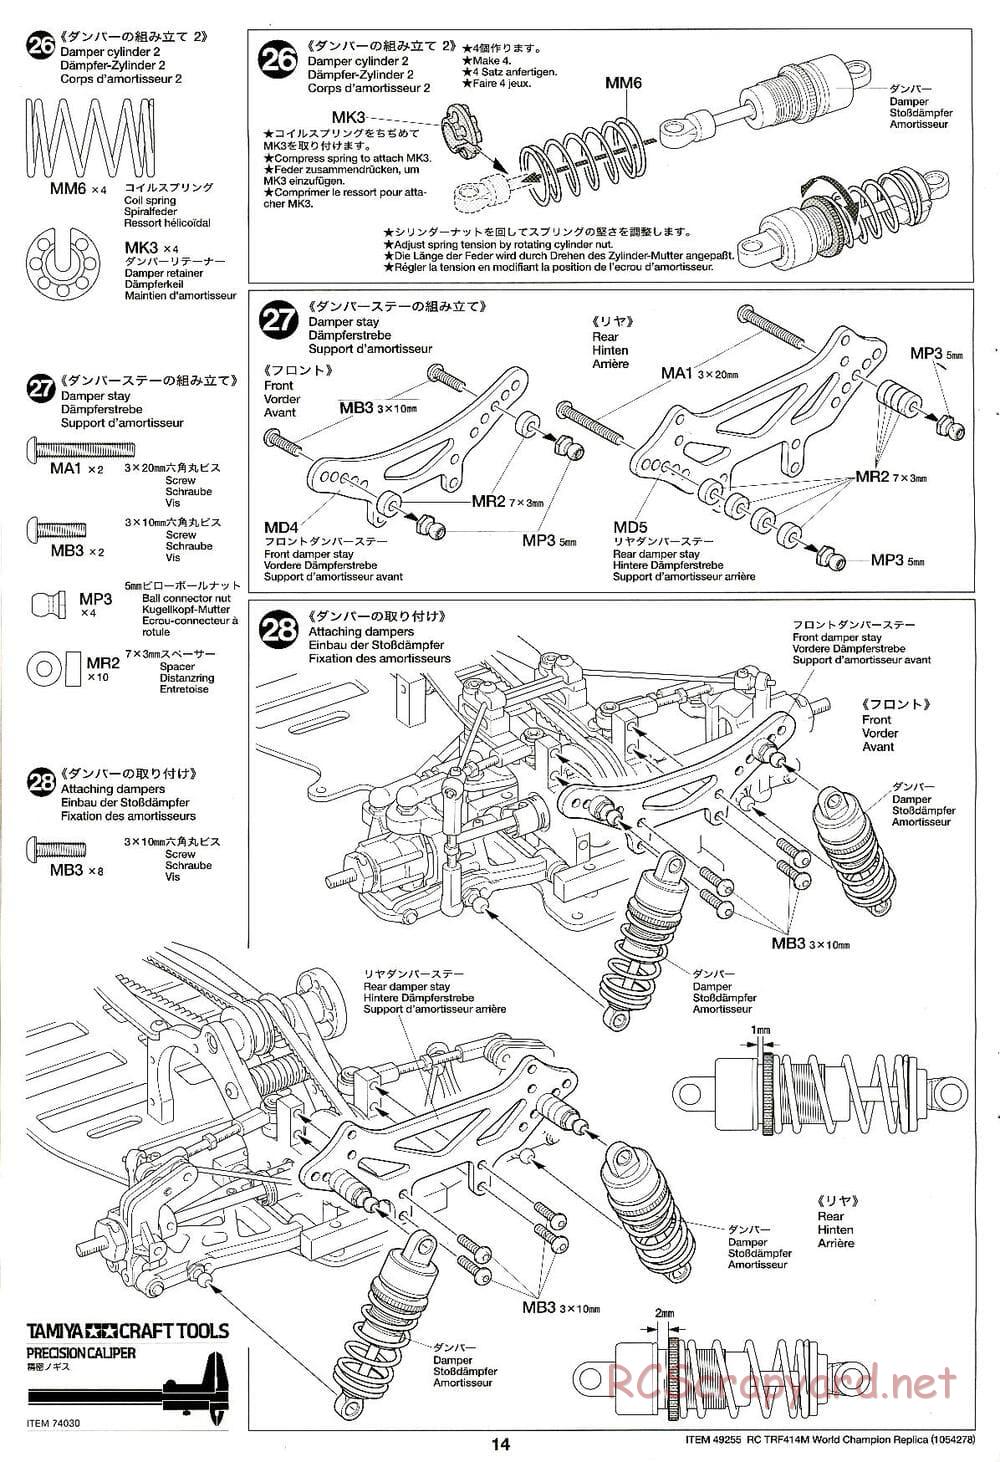 Tamiya - TRF414M World Champion Replica Chassis - Manual - Page 14